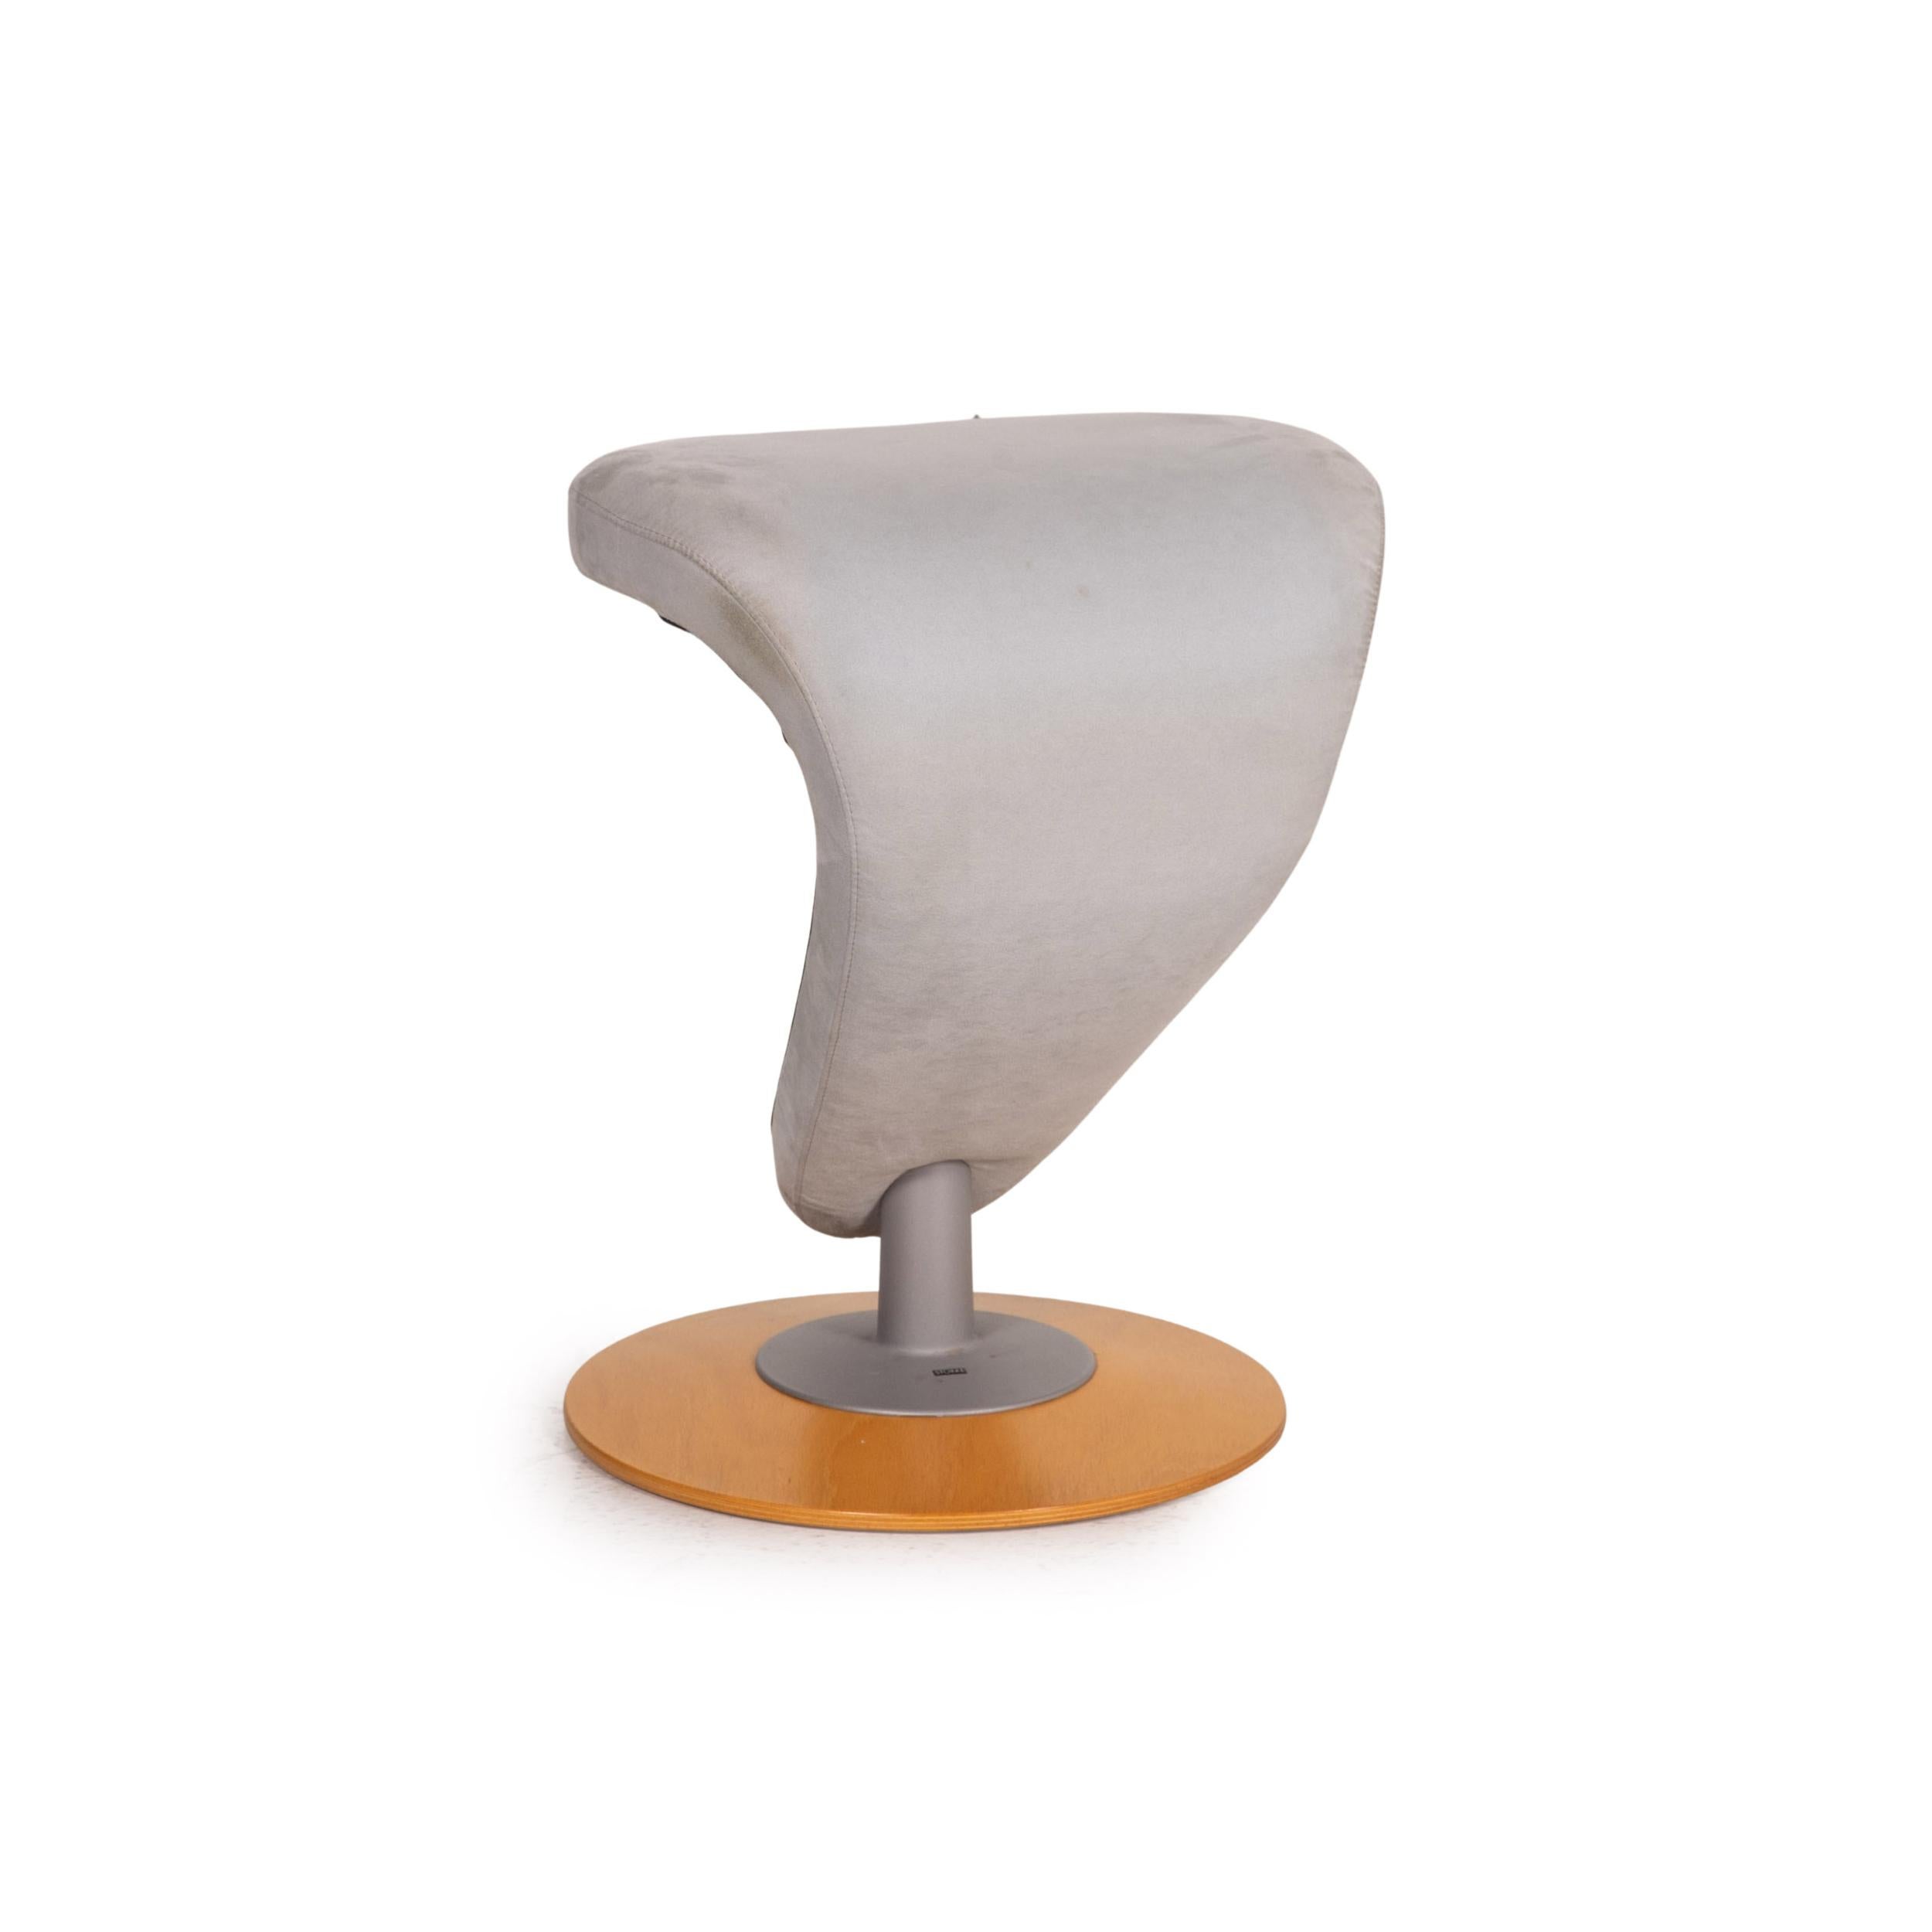 Stokke Peel II fabric armchair incl. Stool gray function headrest 5